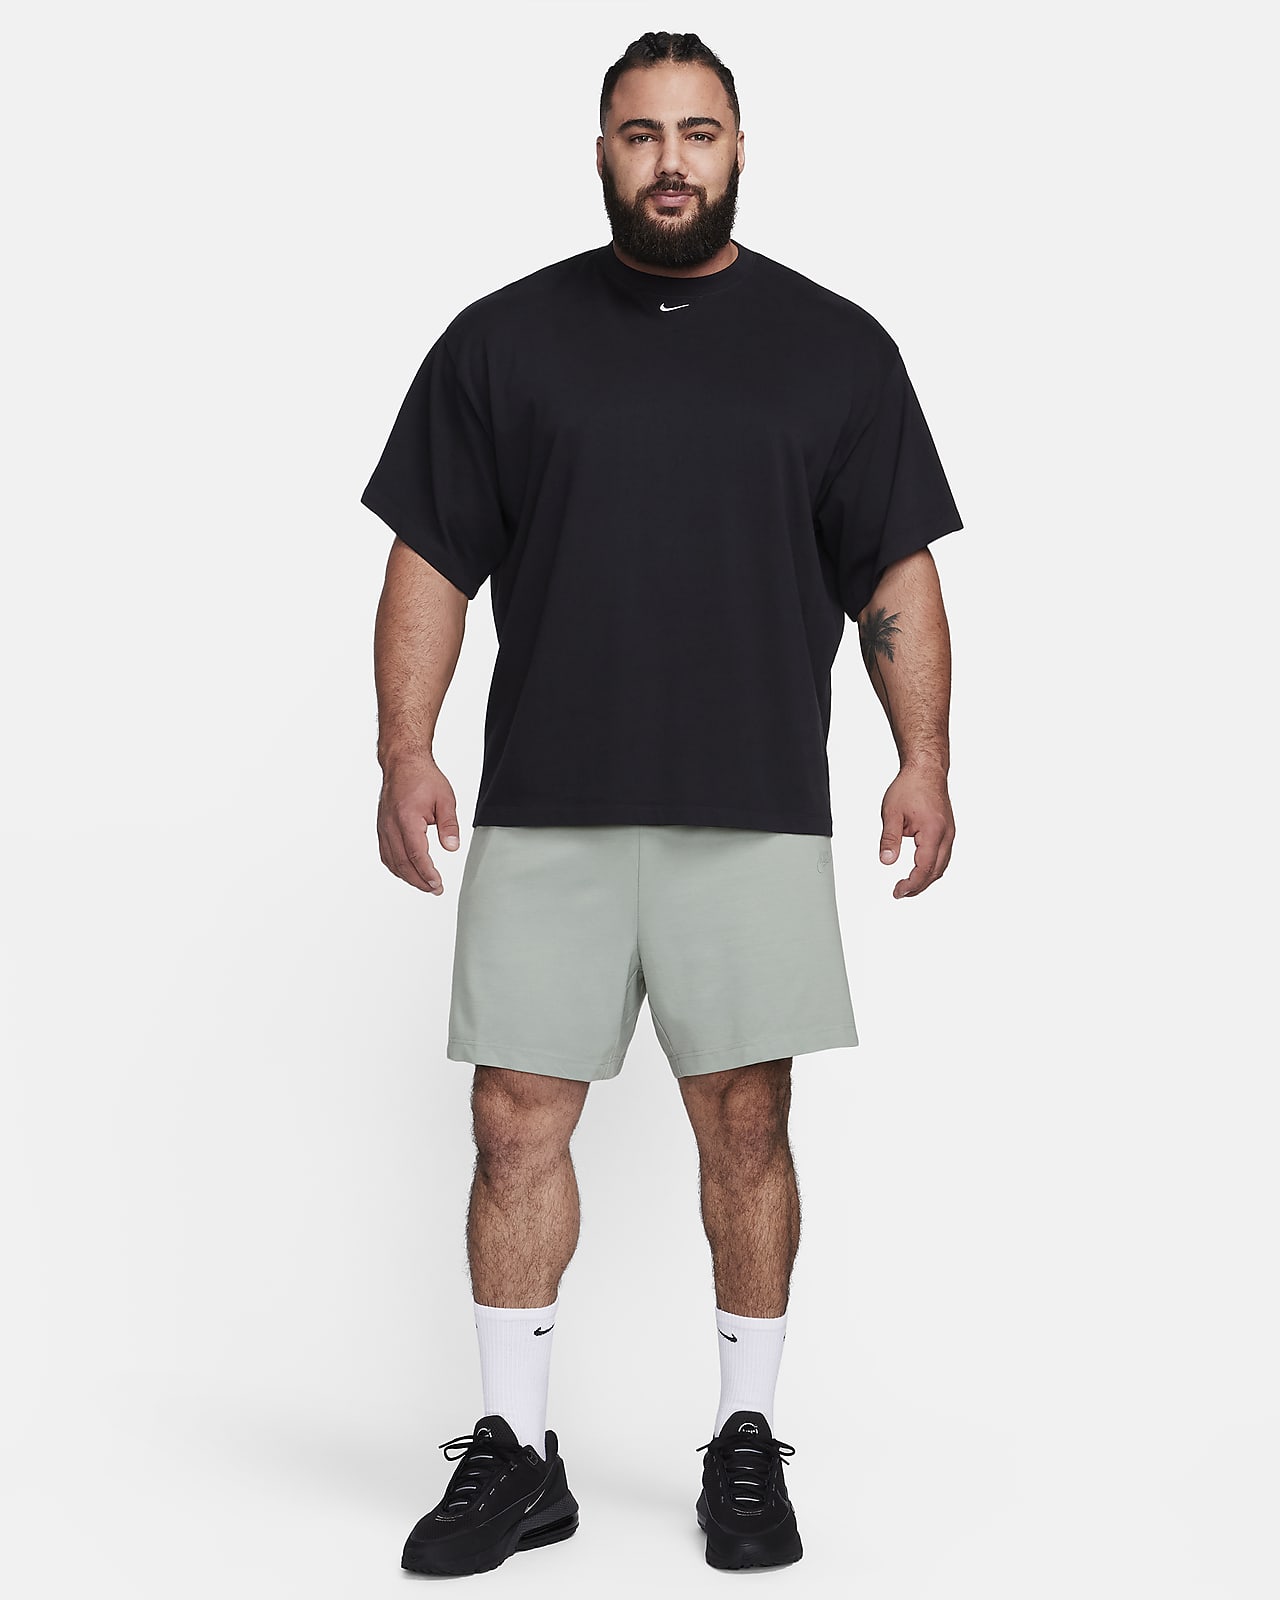 Nike Sportswear Tech Fleece Shorts Sz Large 628984-066 Tapered Athletic Lab  NWT